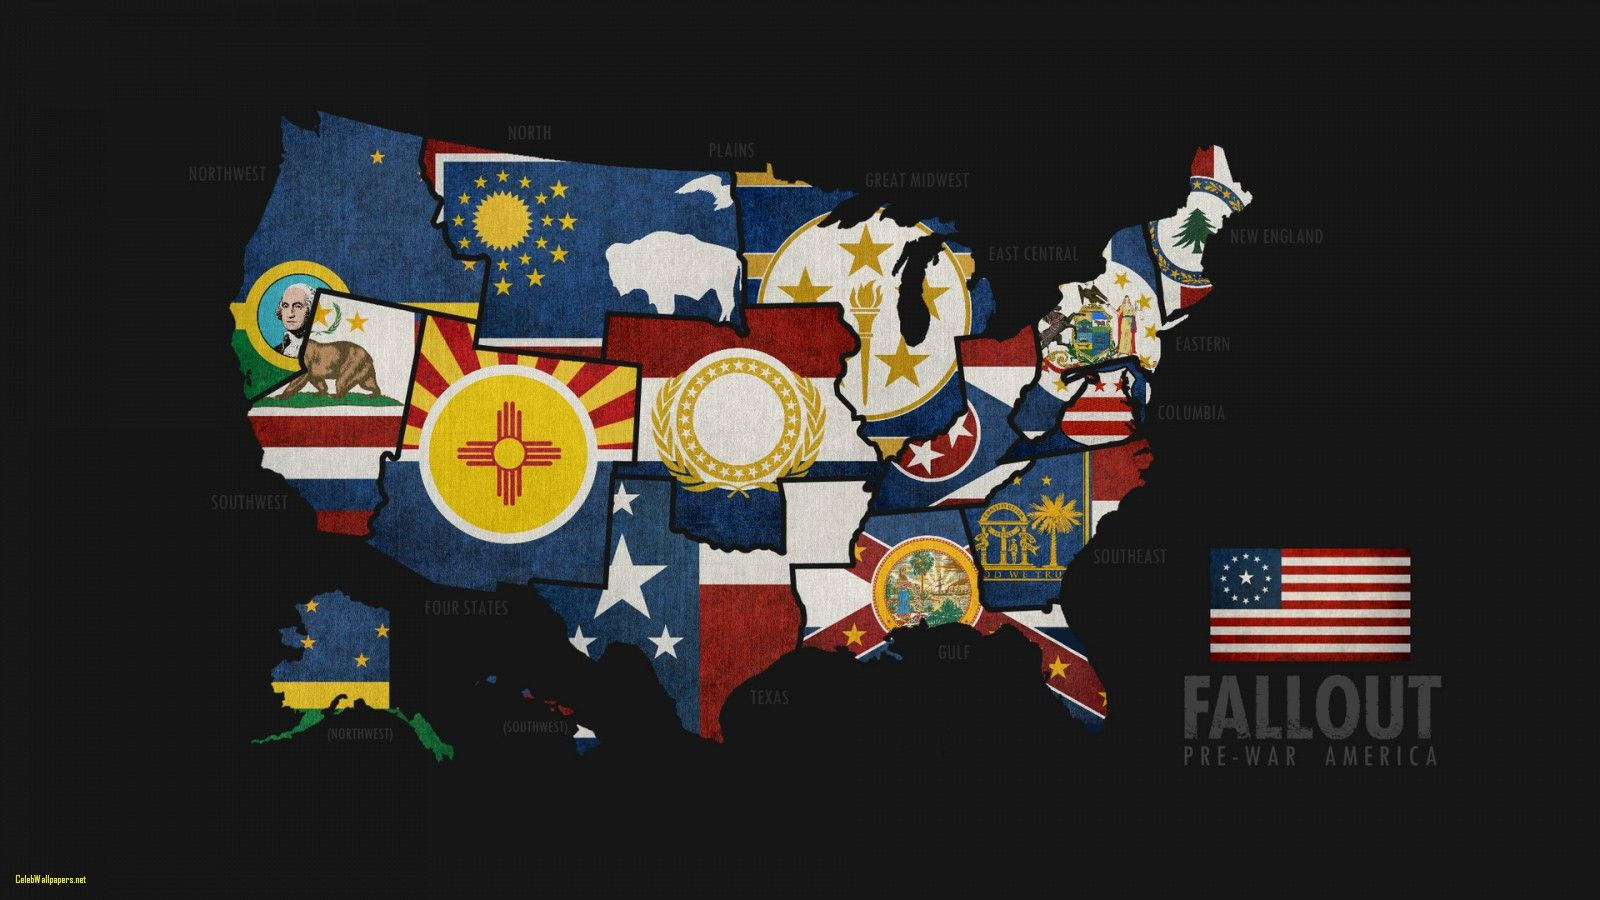 Fallout Map Of Pre-war America Wallpaper